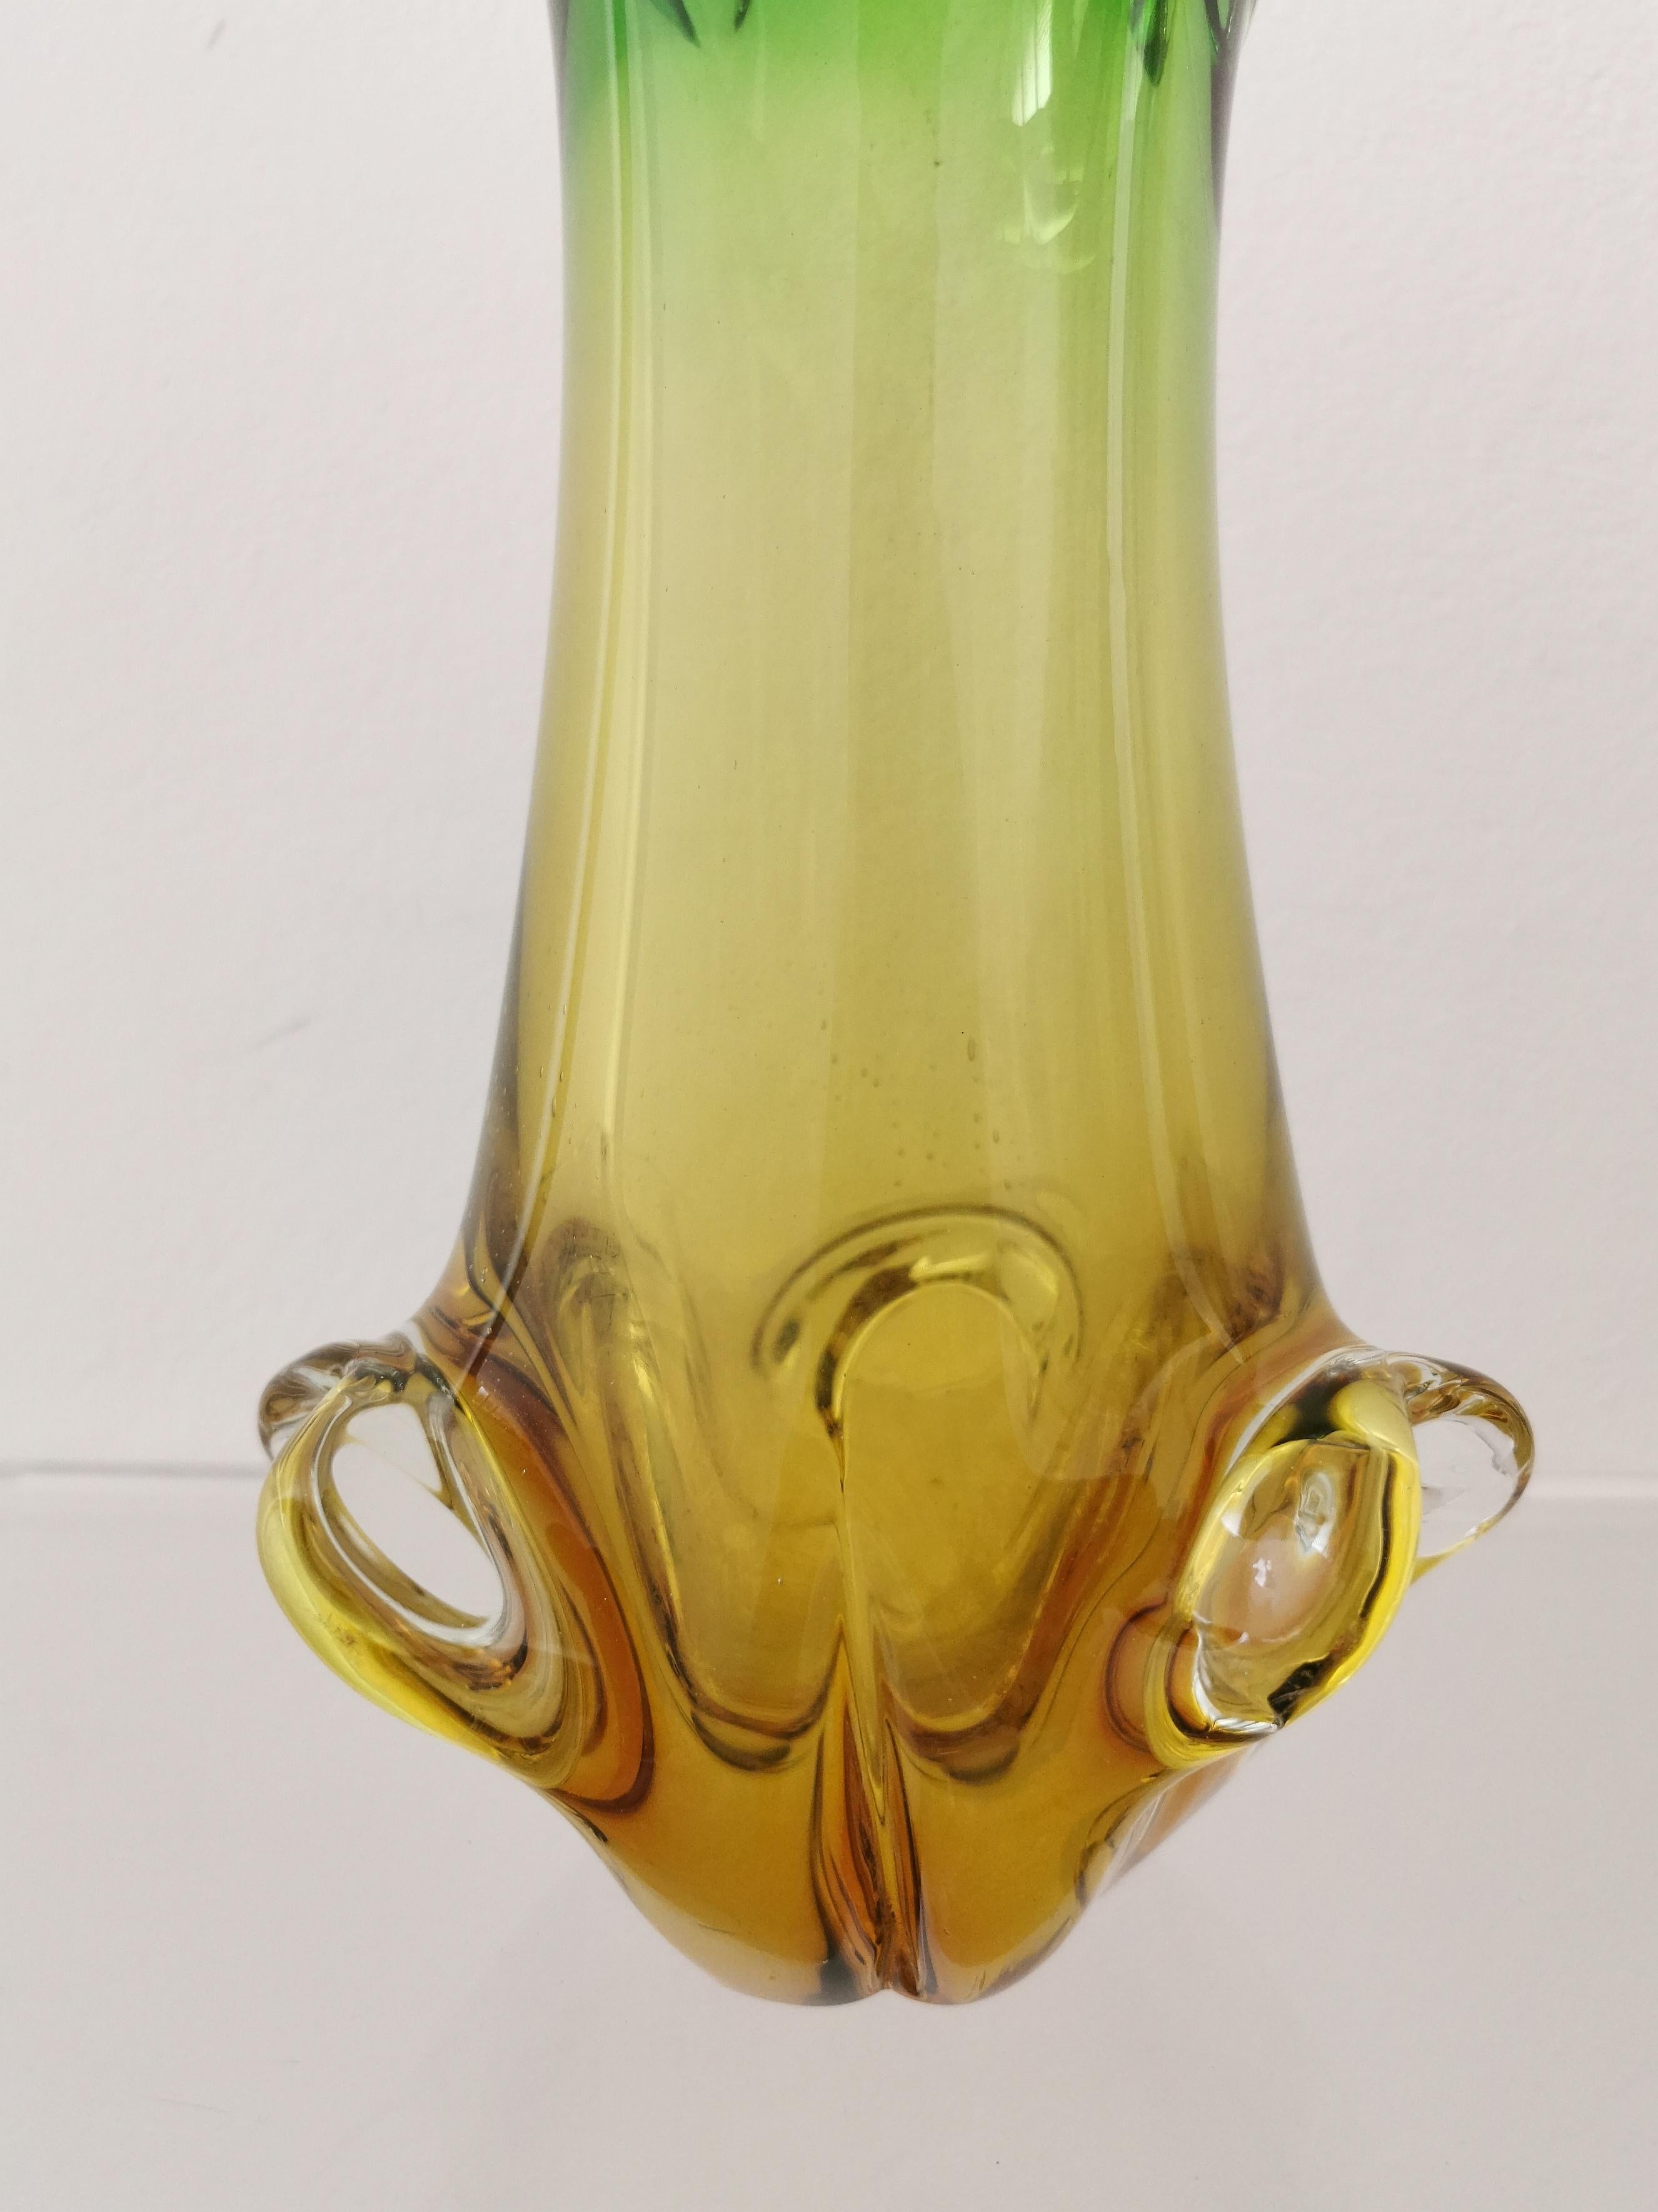 Midcentury Murano Glass Vase De Majo Green Decorative Object Italian Design 1970 1